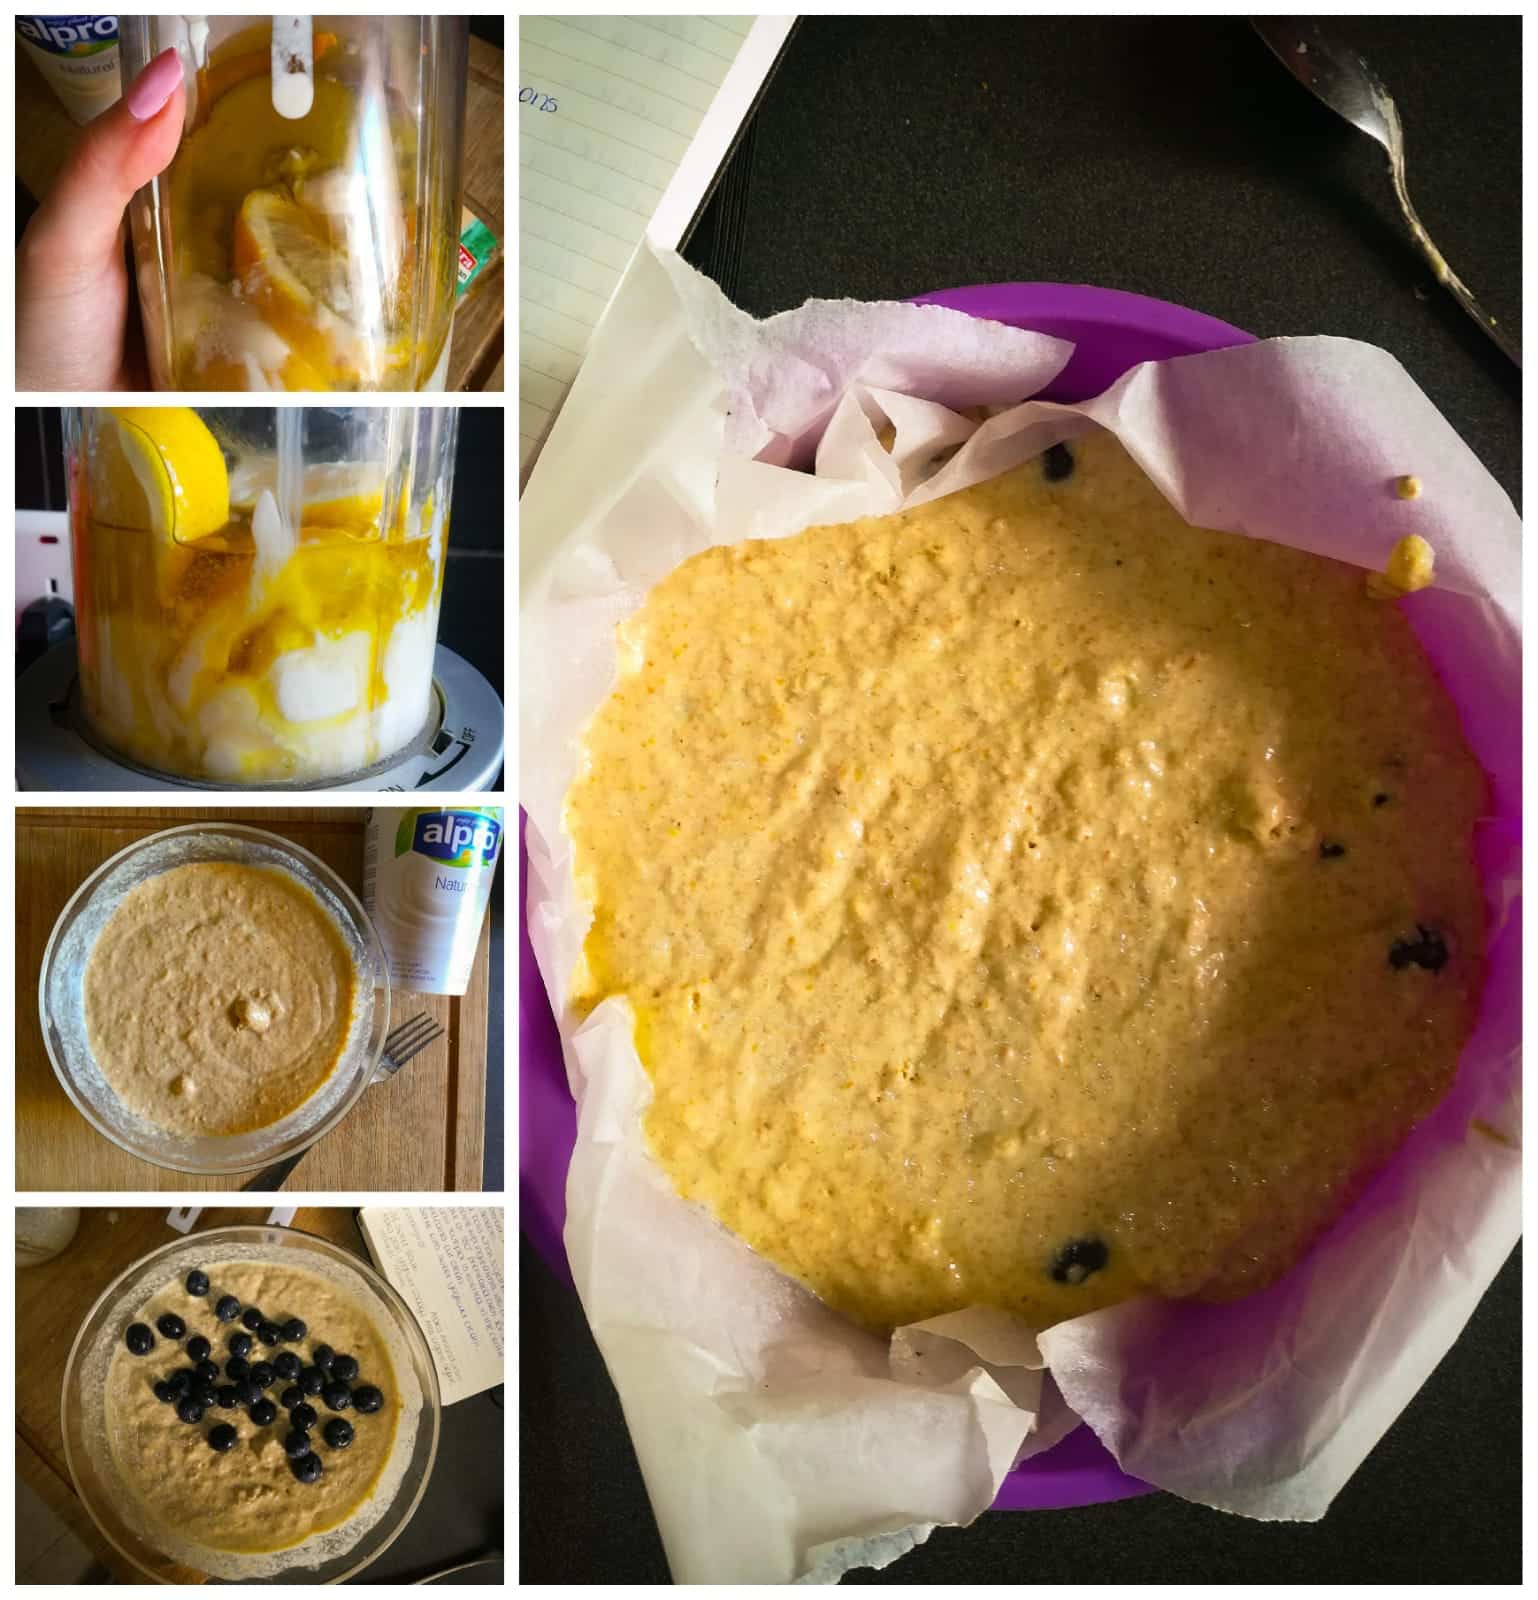 ramona debono making Lemon Blueberry Yoghurt Blender Cake